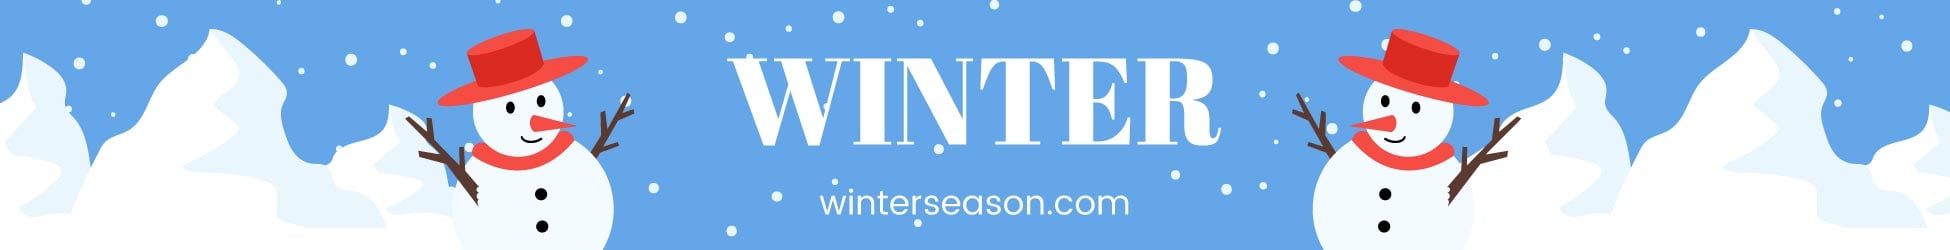 Winter Website Banner in Illustrator, PSD, EPS, SVG, JPG, PNG